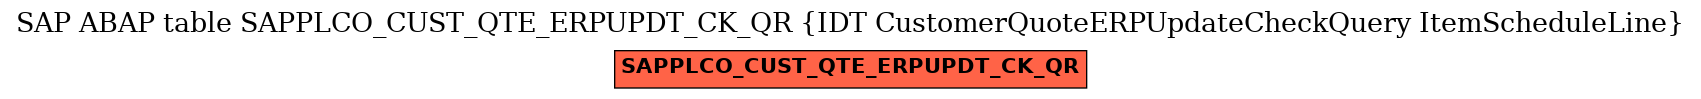 E-R Diagram for table SAPPLCO_CUST_QTE_ERPUPDT_CK_QR (IDT CustomerQuoteERPUpdateCheckQuery ItemScheduleLine)